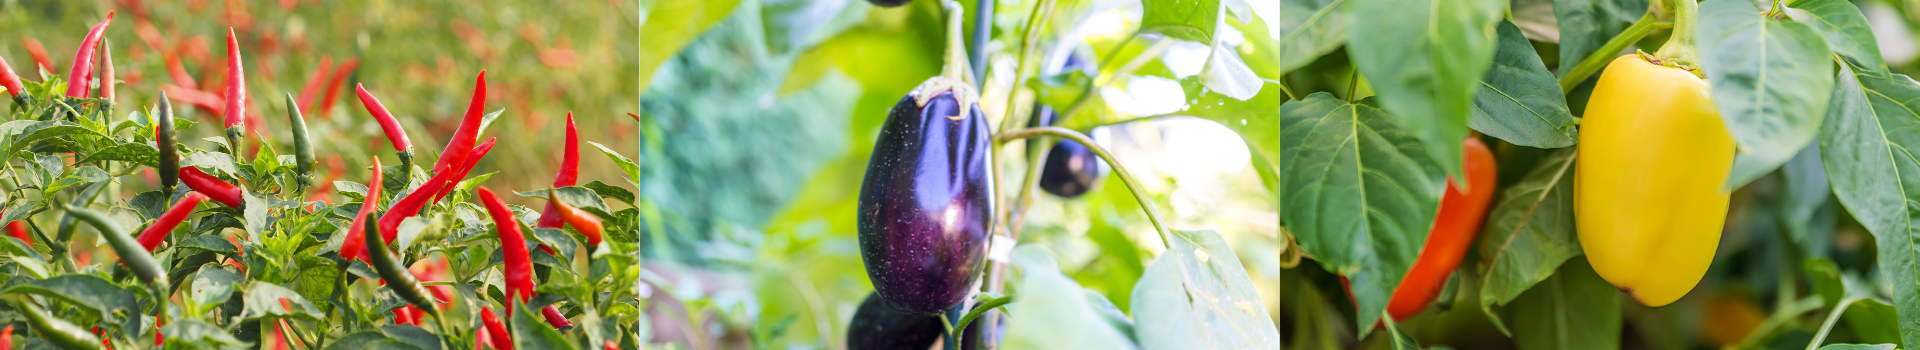 Disease Models - chilli, eggplant and paprika